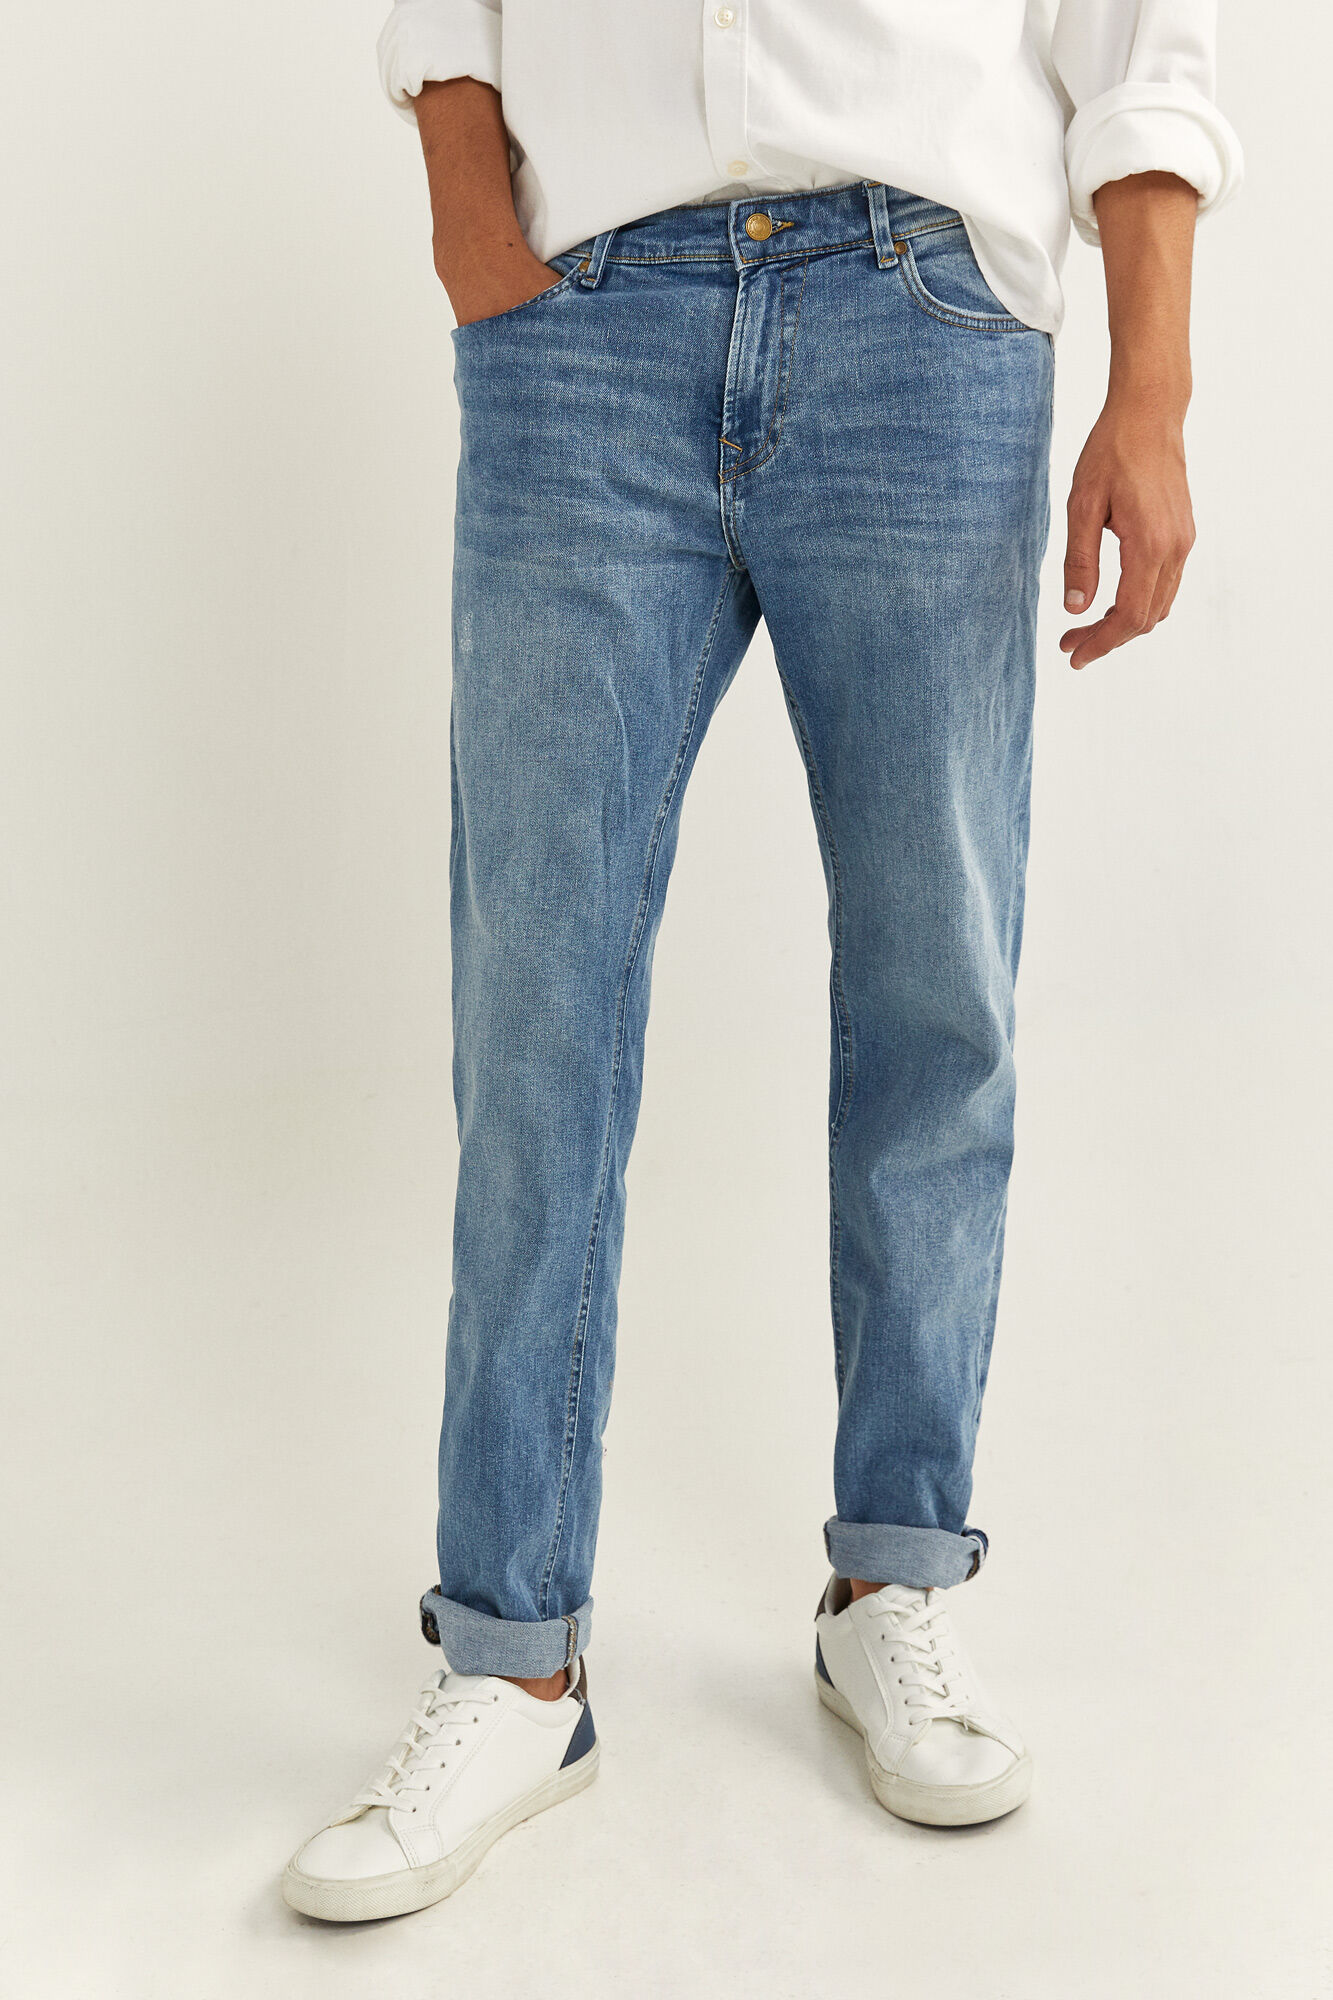 springfield jeans price